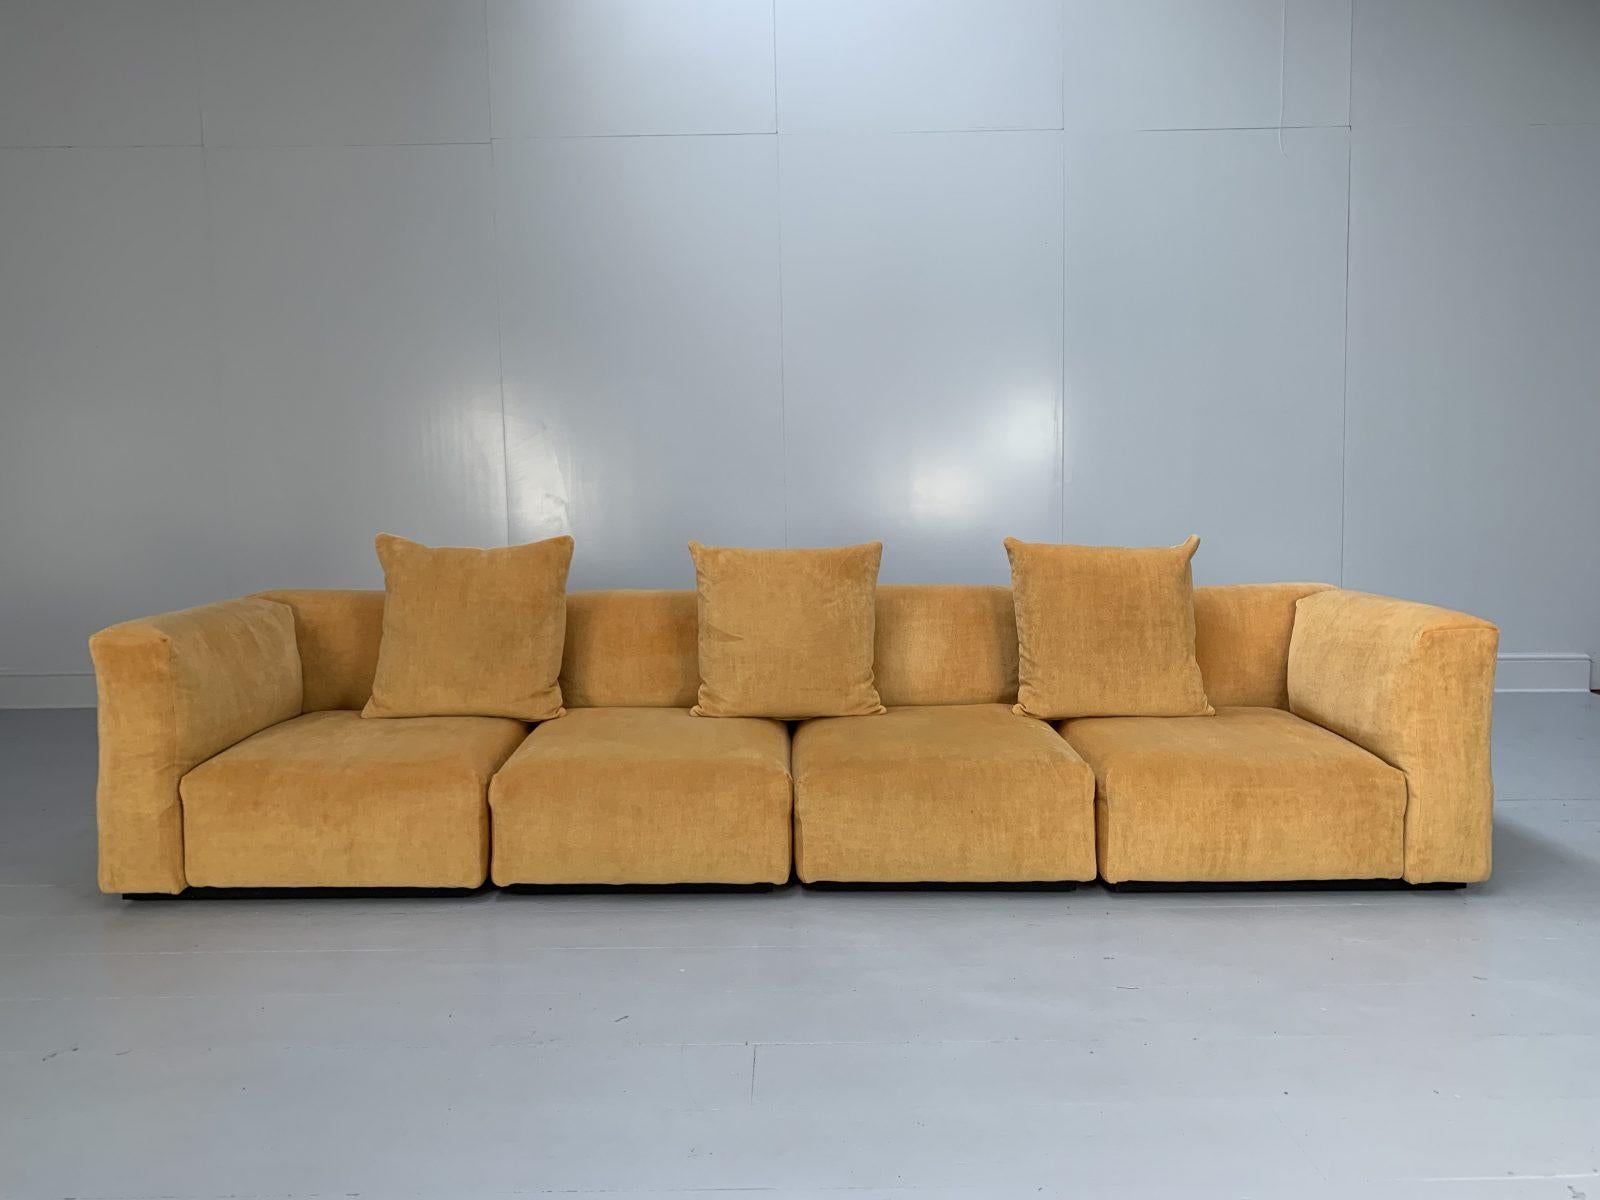 Cassina “271 Mex Cube” 4-Seat Sectional Sofa in Gold Mohair Velvet For Sale 1